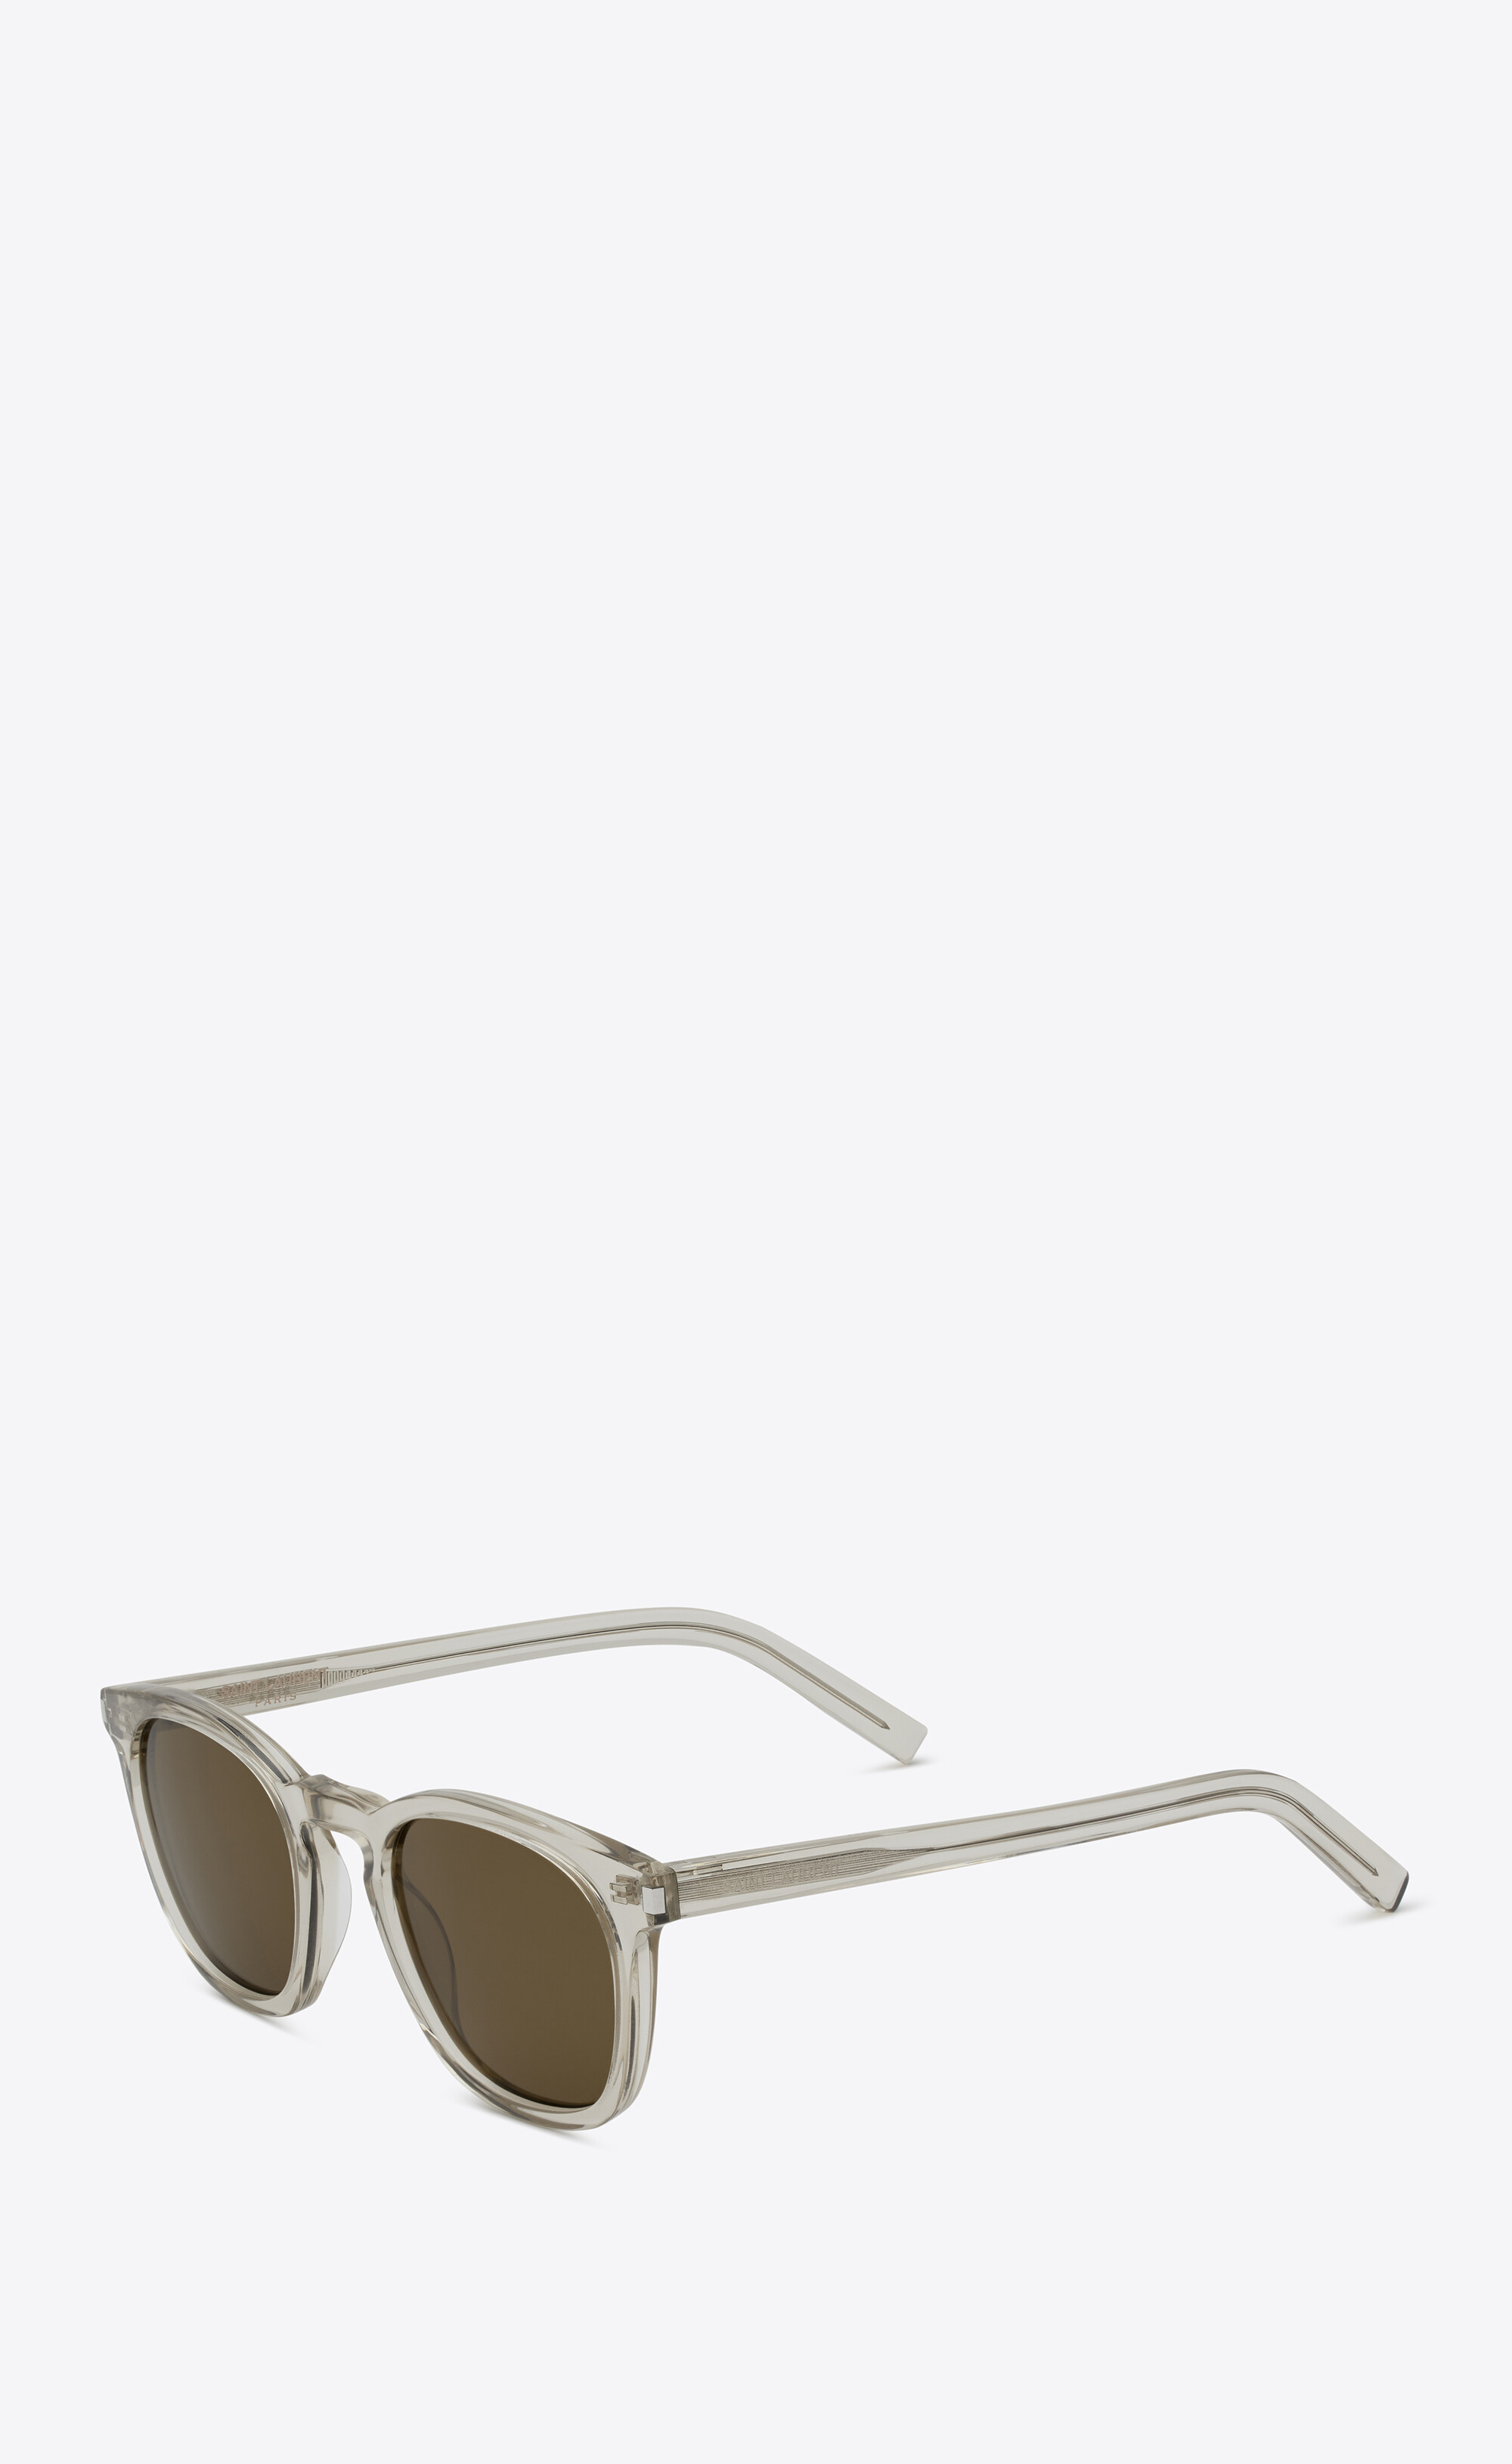 Yves Saint Laurent | YSL SL 28 METAL Sunglasses | FREE Shipping